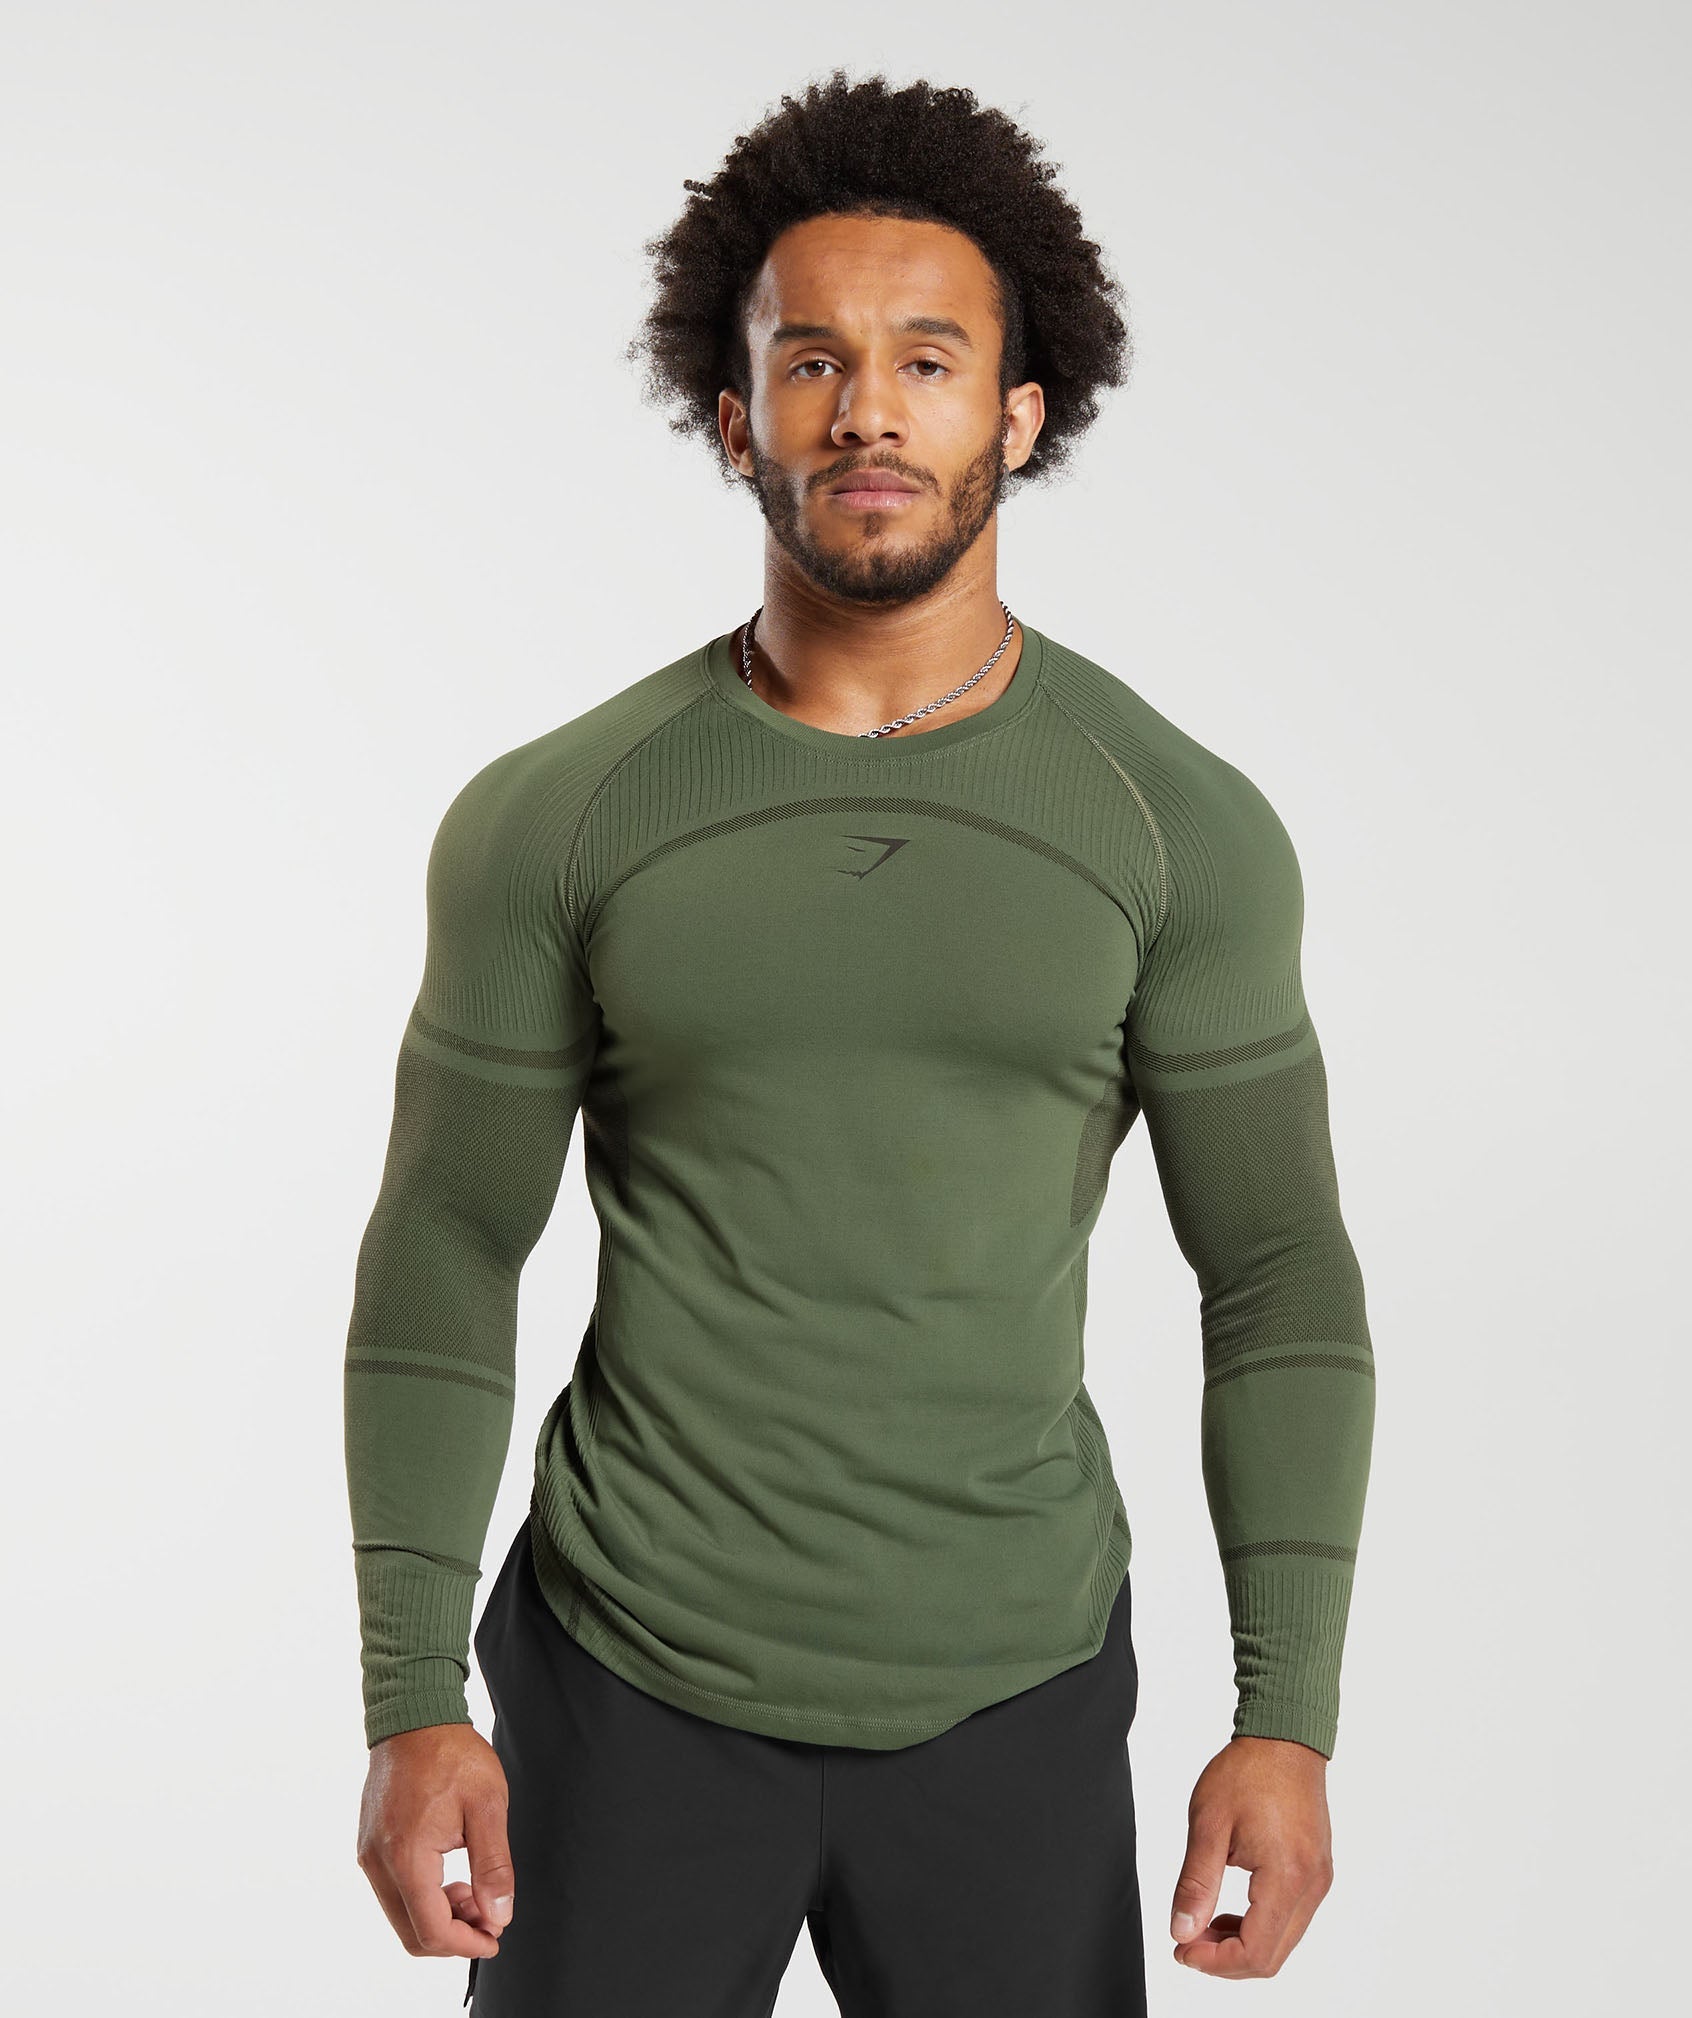 Men's Bodybuilding Clothes & Gym Wear - Gymshark